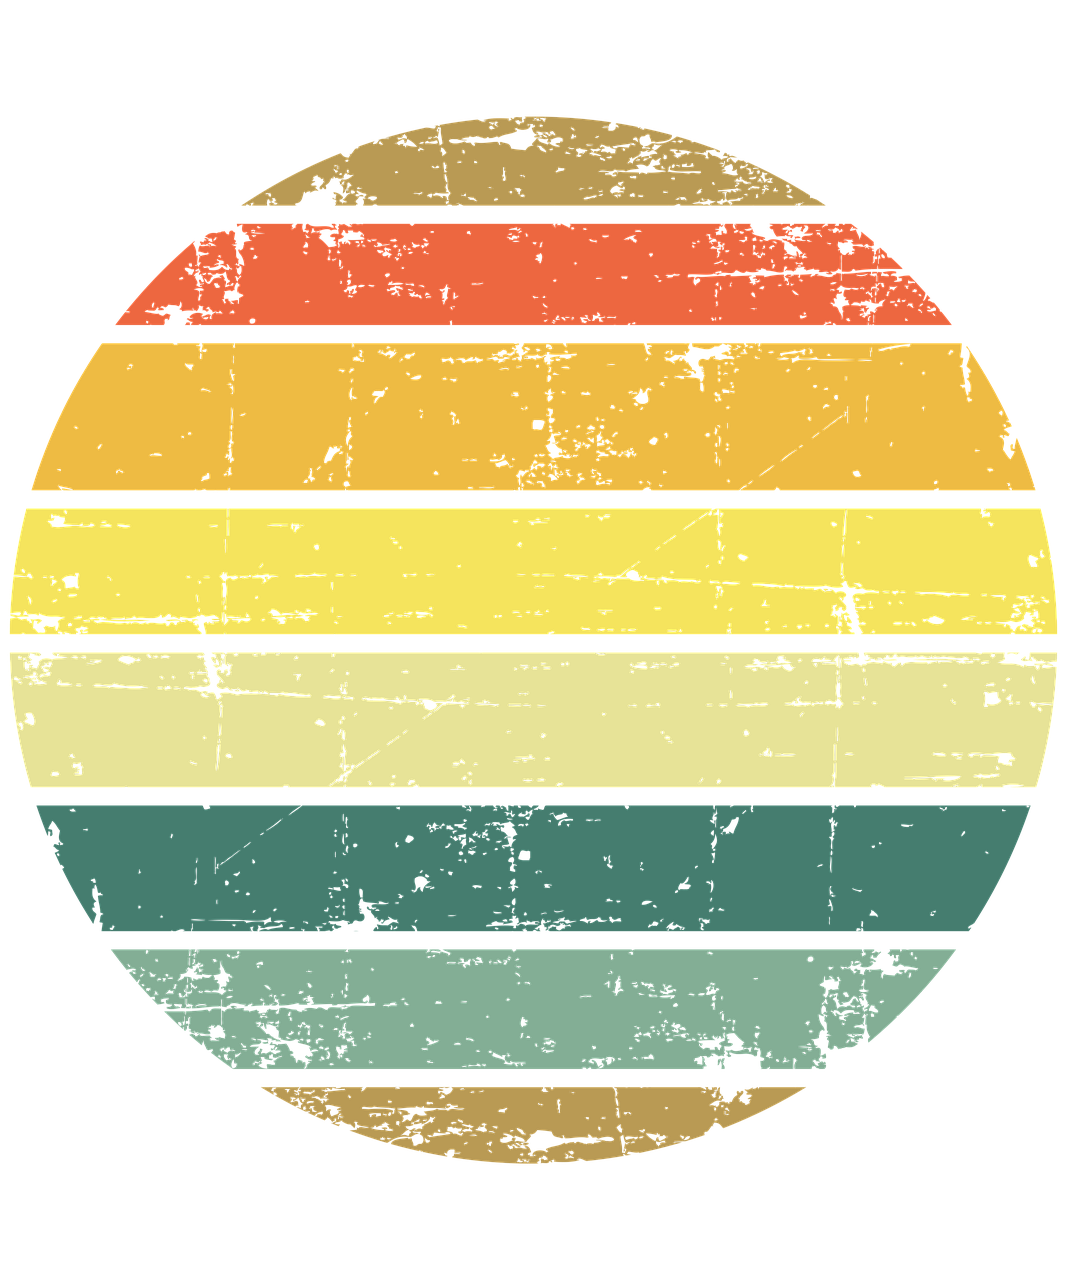 Sun in rainbow colors